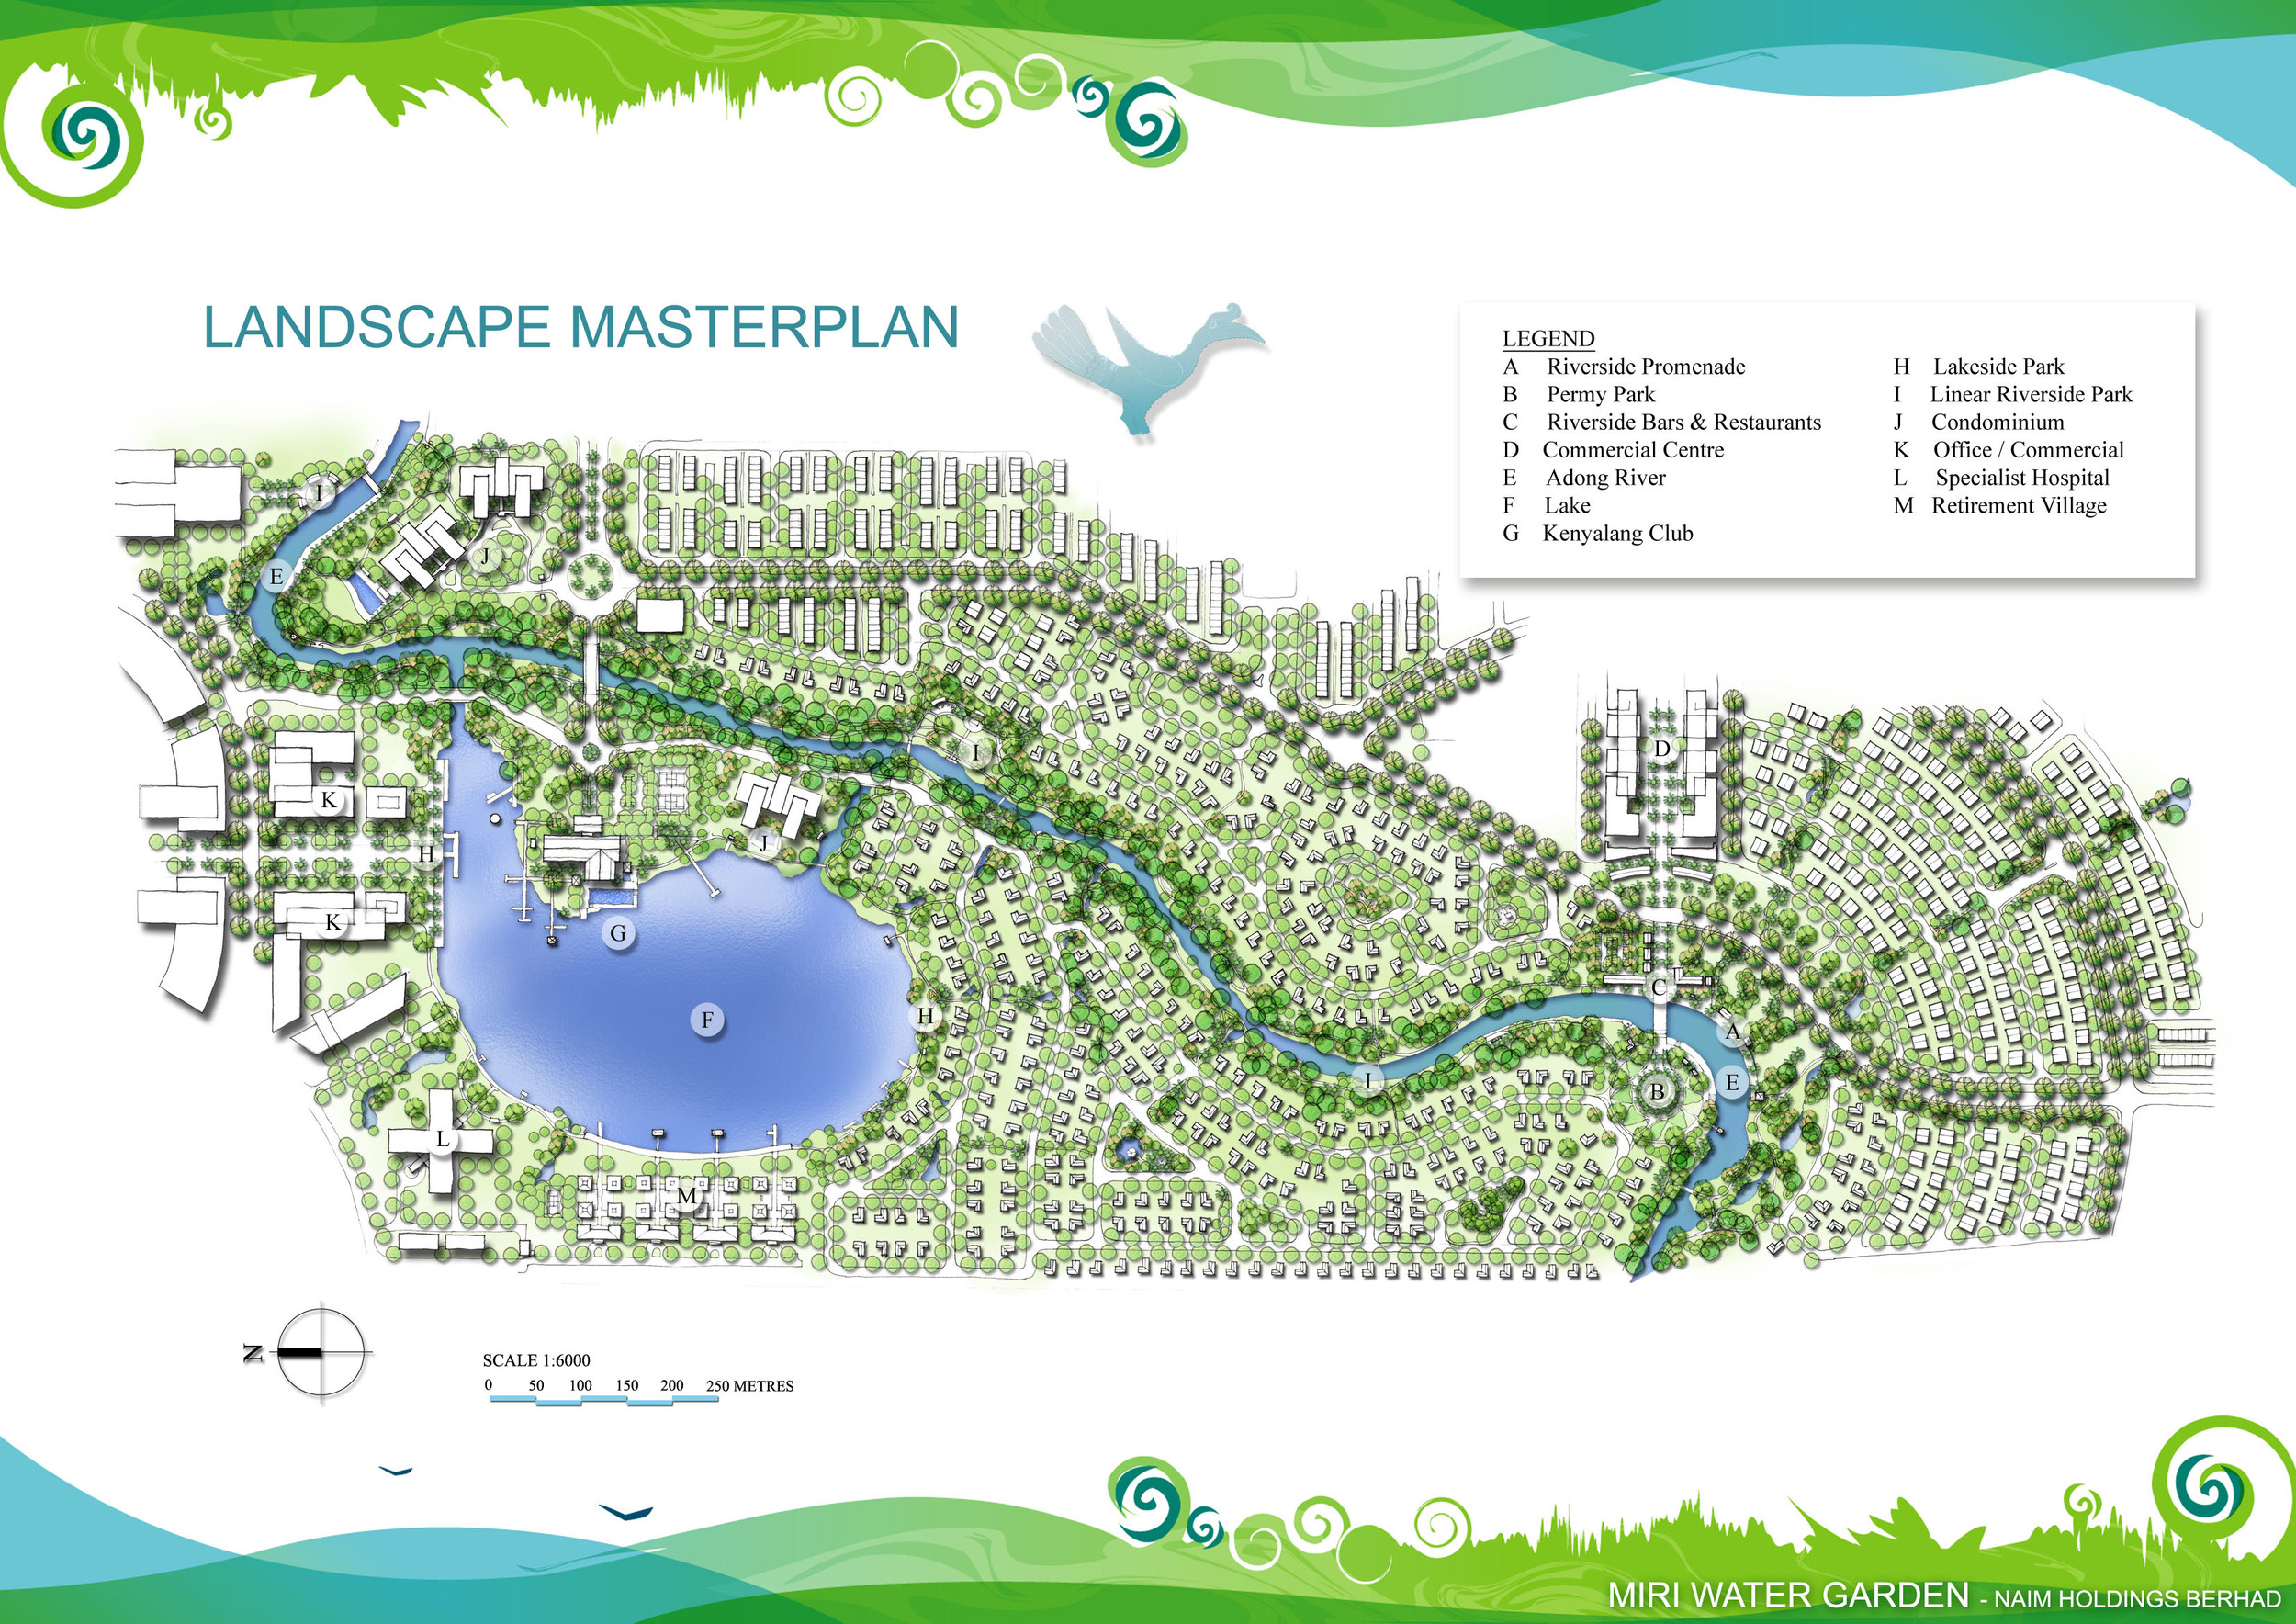 2 Landscape Masterplan on A3 scld.jpg